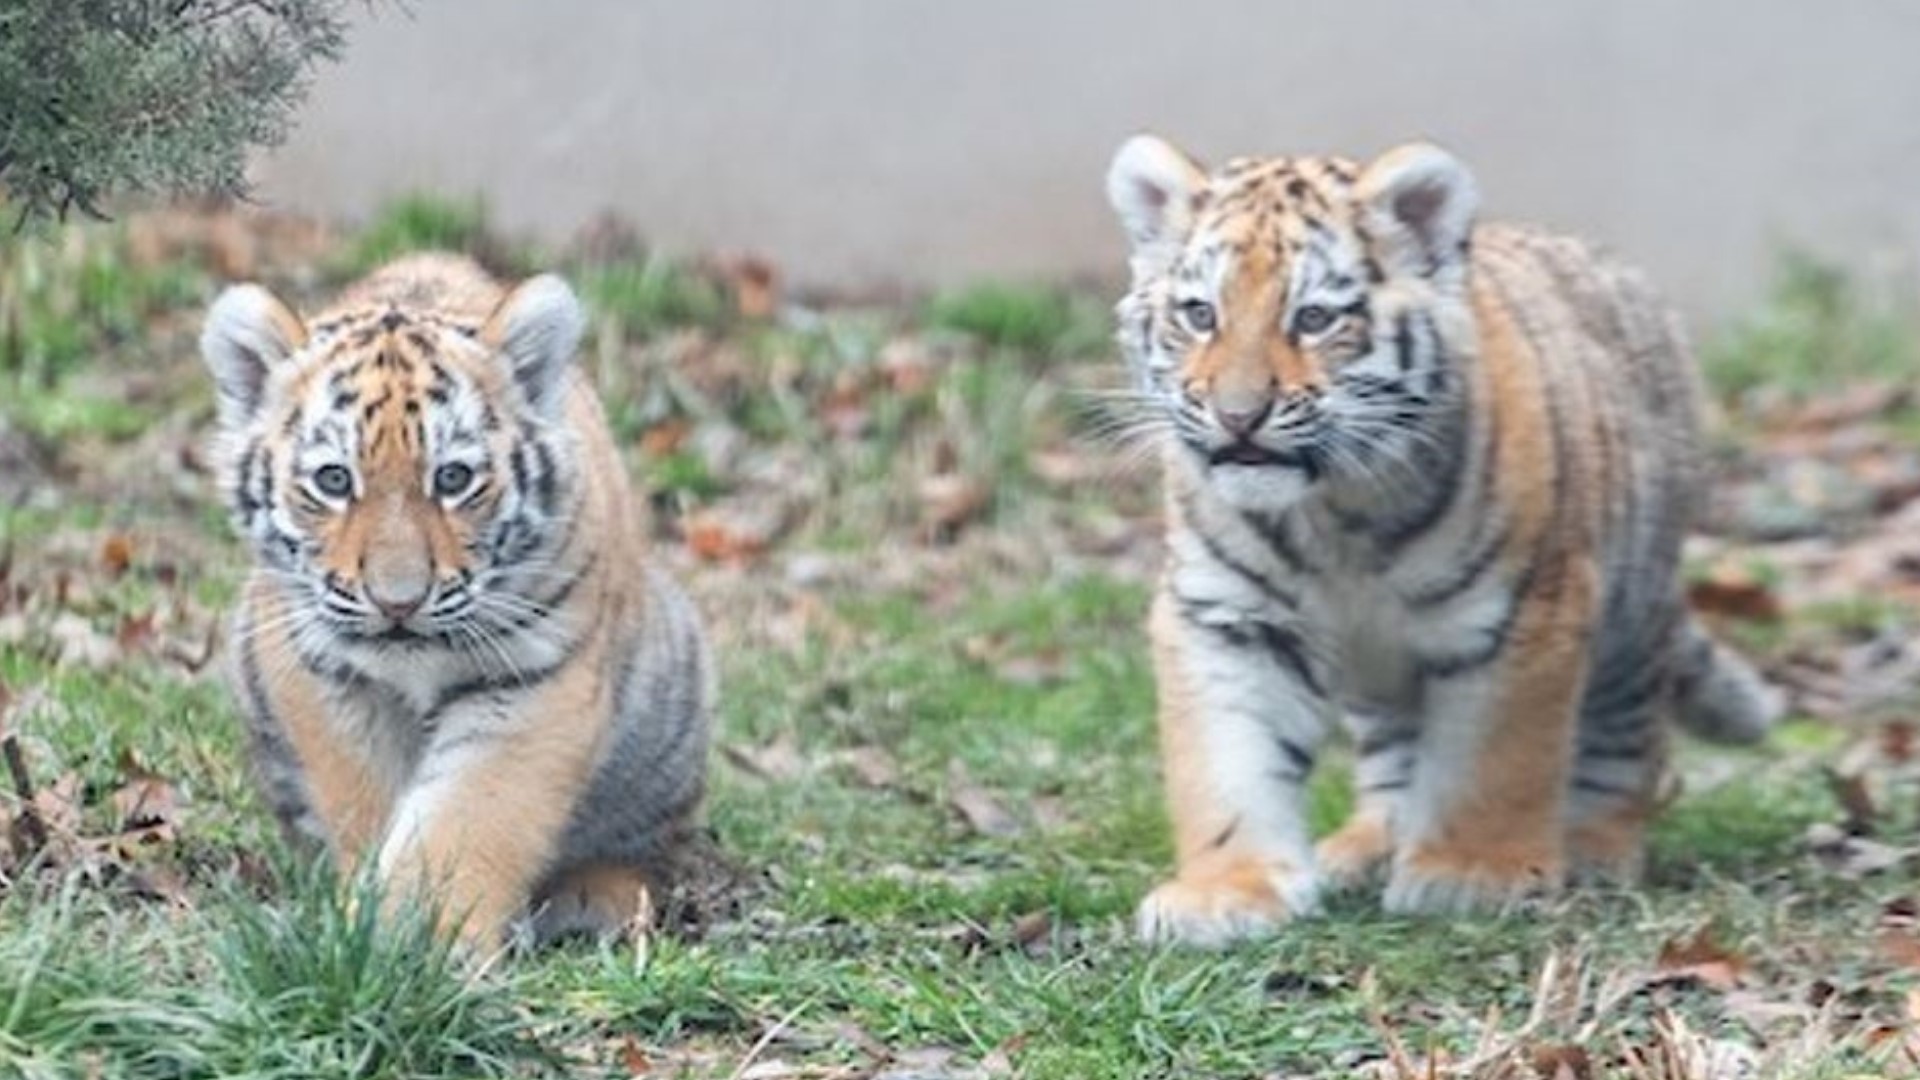 Both tiger cubs were born last year on Nov. 6.